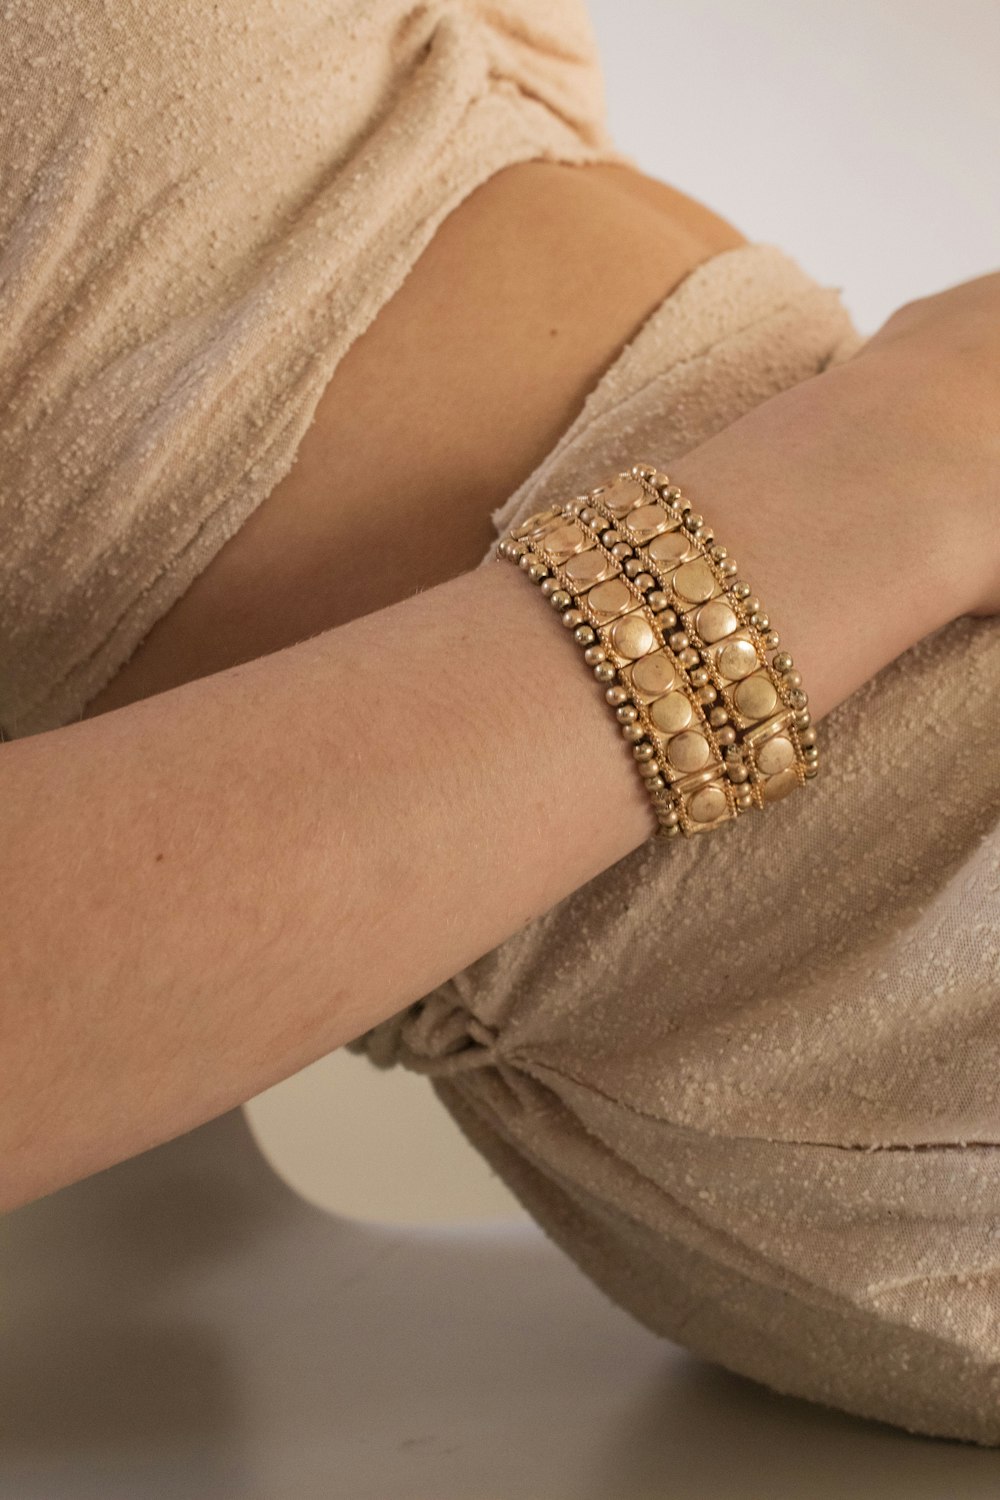 a person wearing a gold bracelet